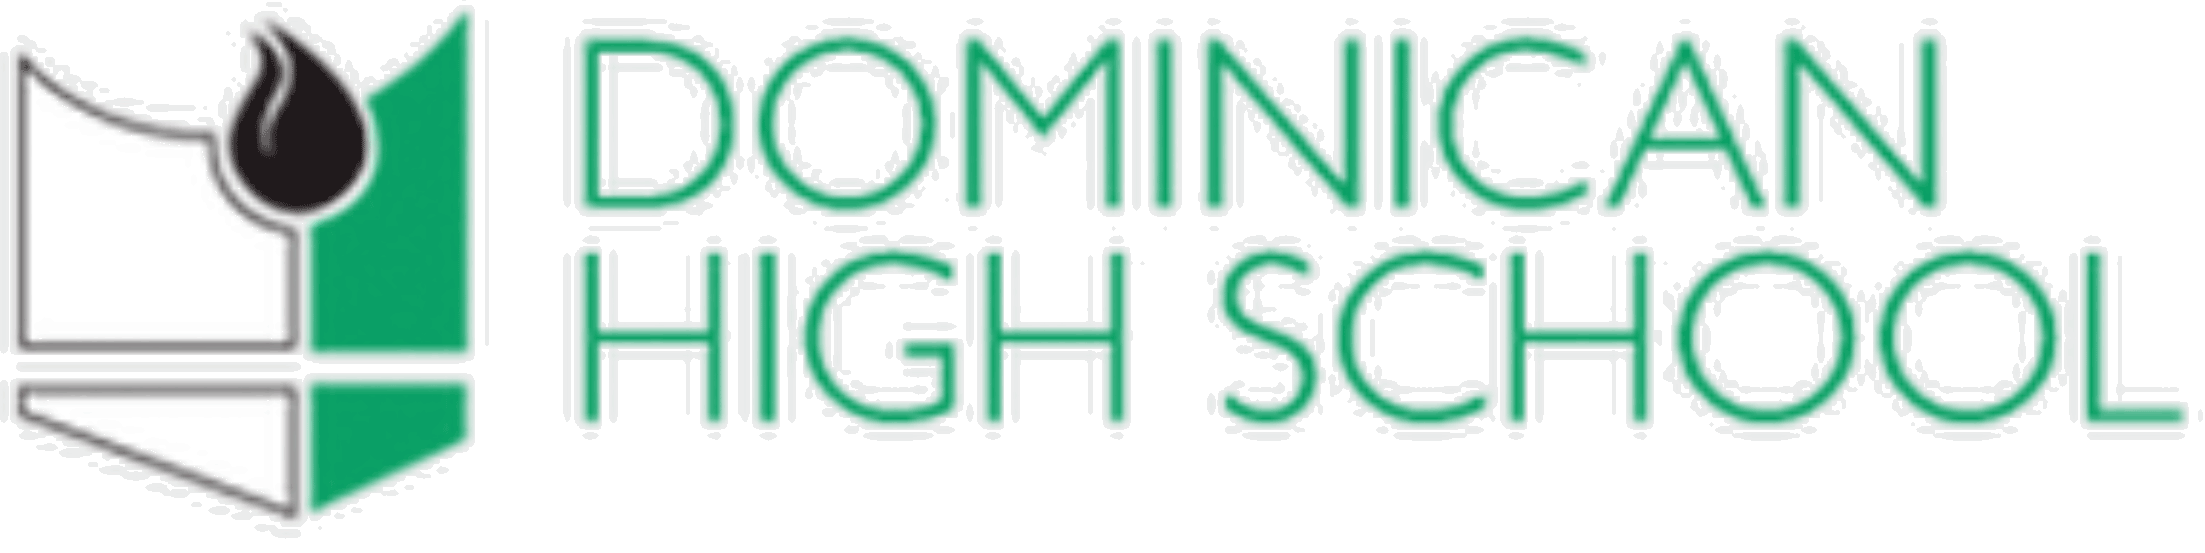 Dominican High School Company Logo